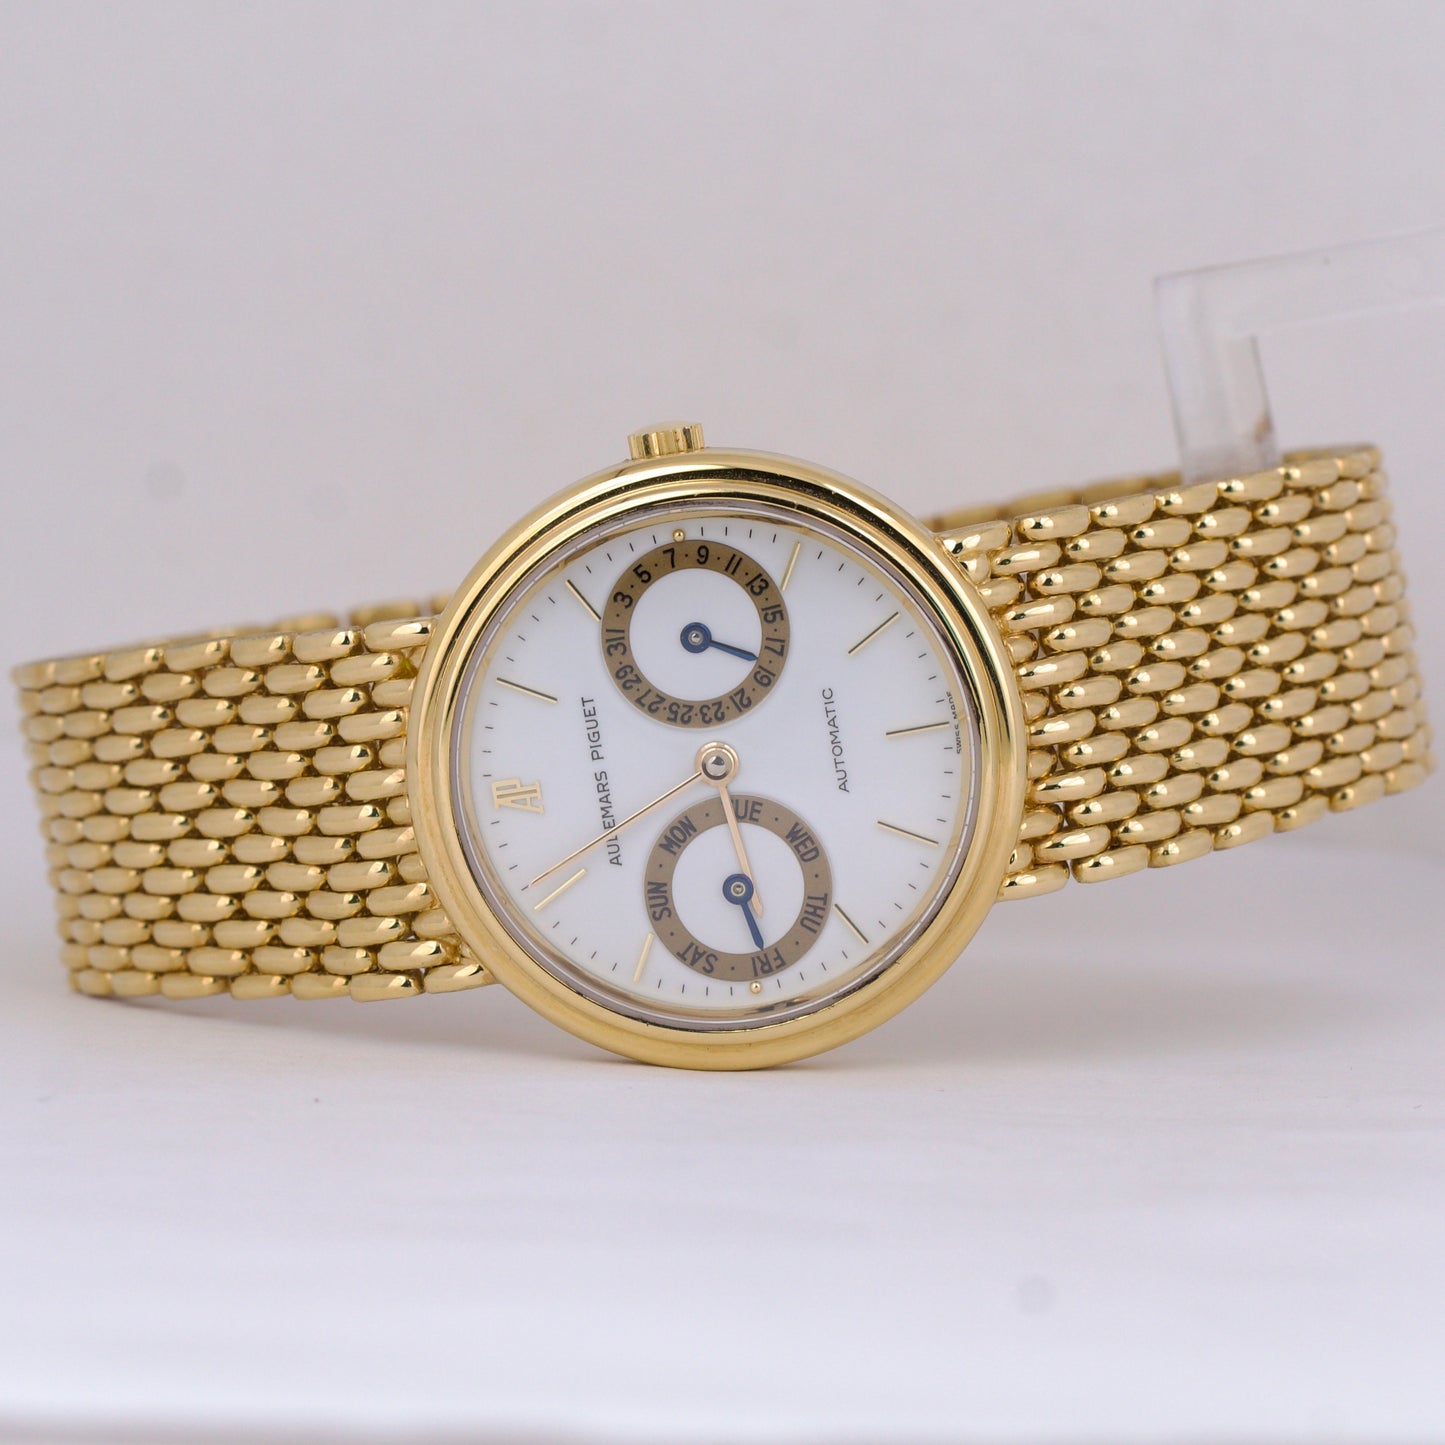 Audemars Piguet Day-Date OWL 33mm White 18K Yellow Gold Automatic Watch 25574BA